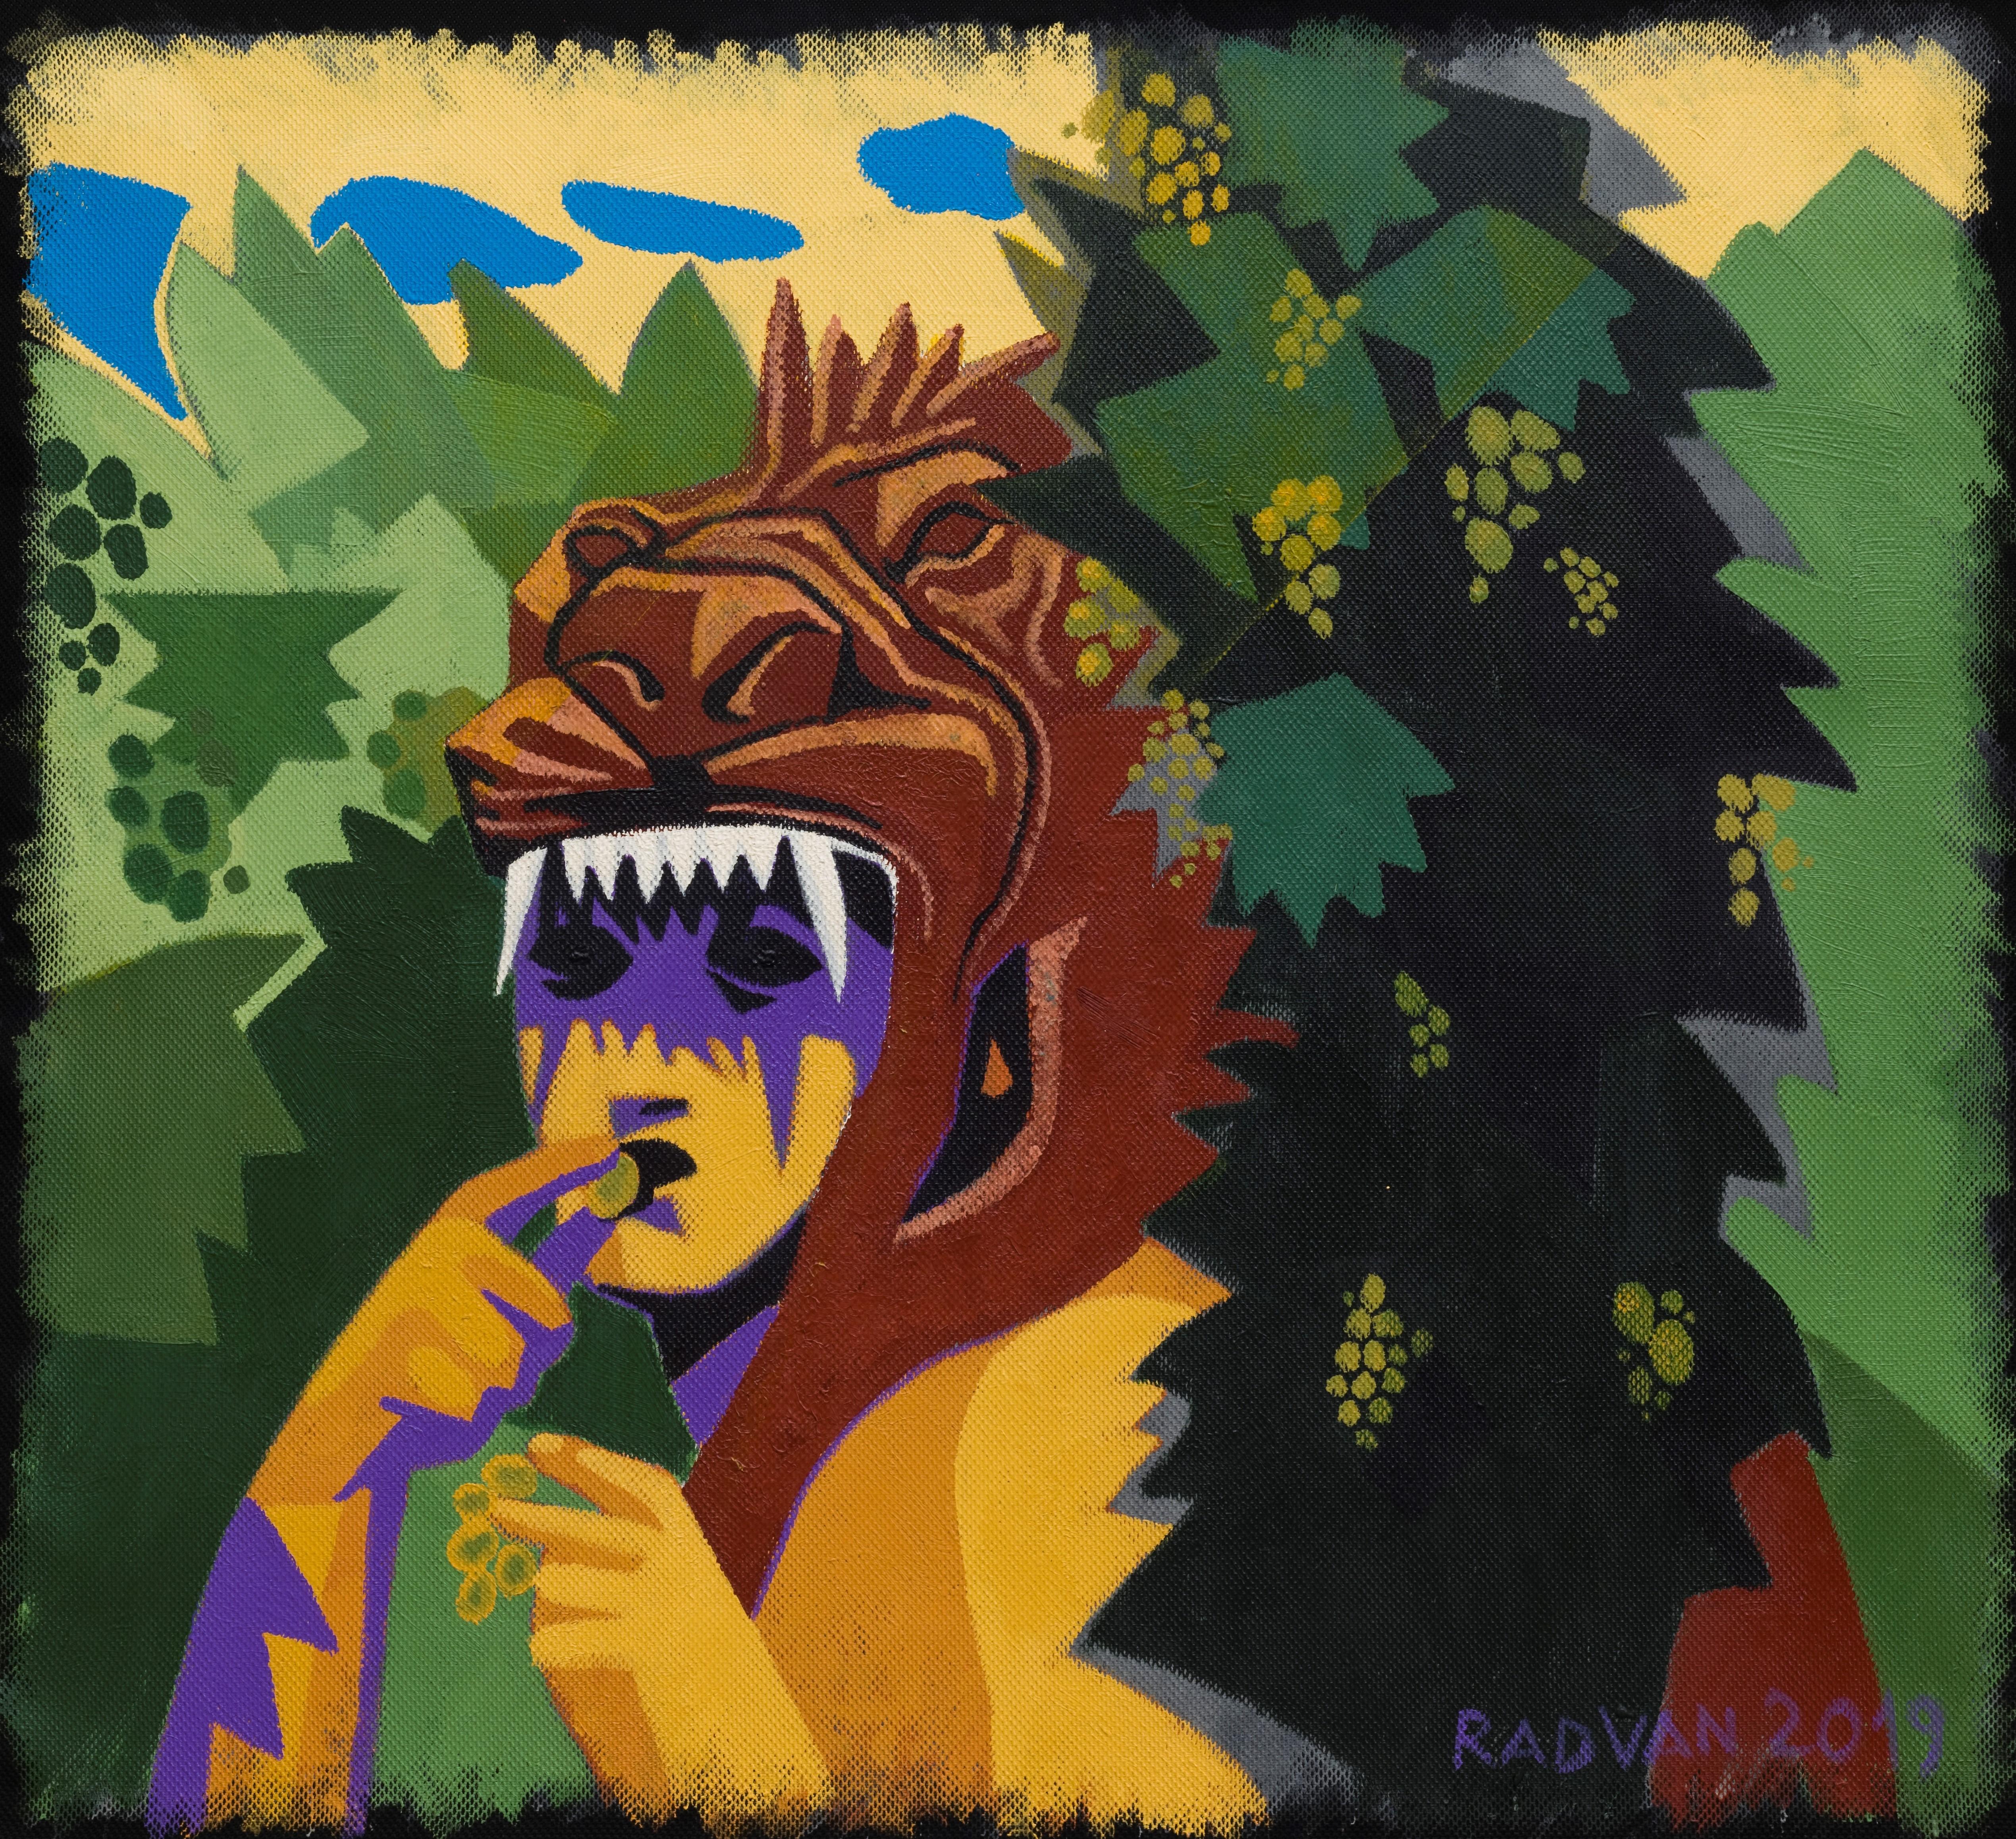 Alexandru Rădvan Animal Painting - Hercules in Vineyard - Contemporary, Lion, Grapes, Green, Yellow, Hero, Nature